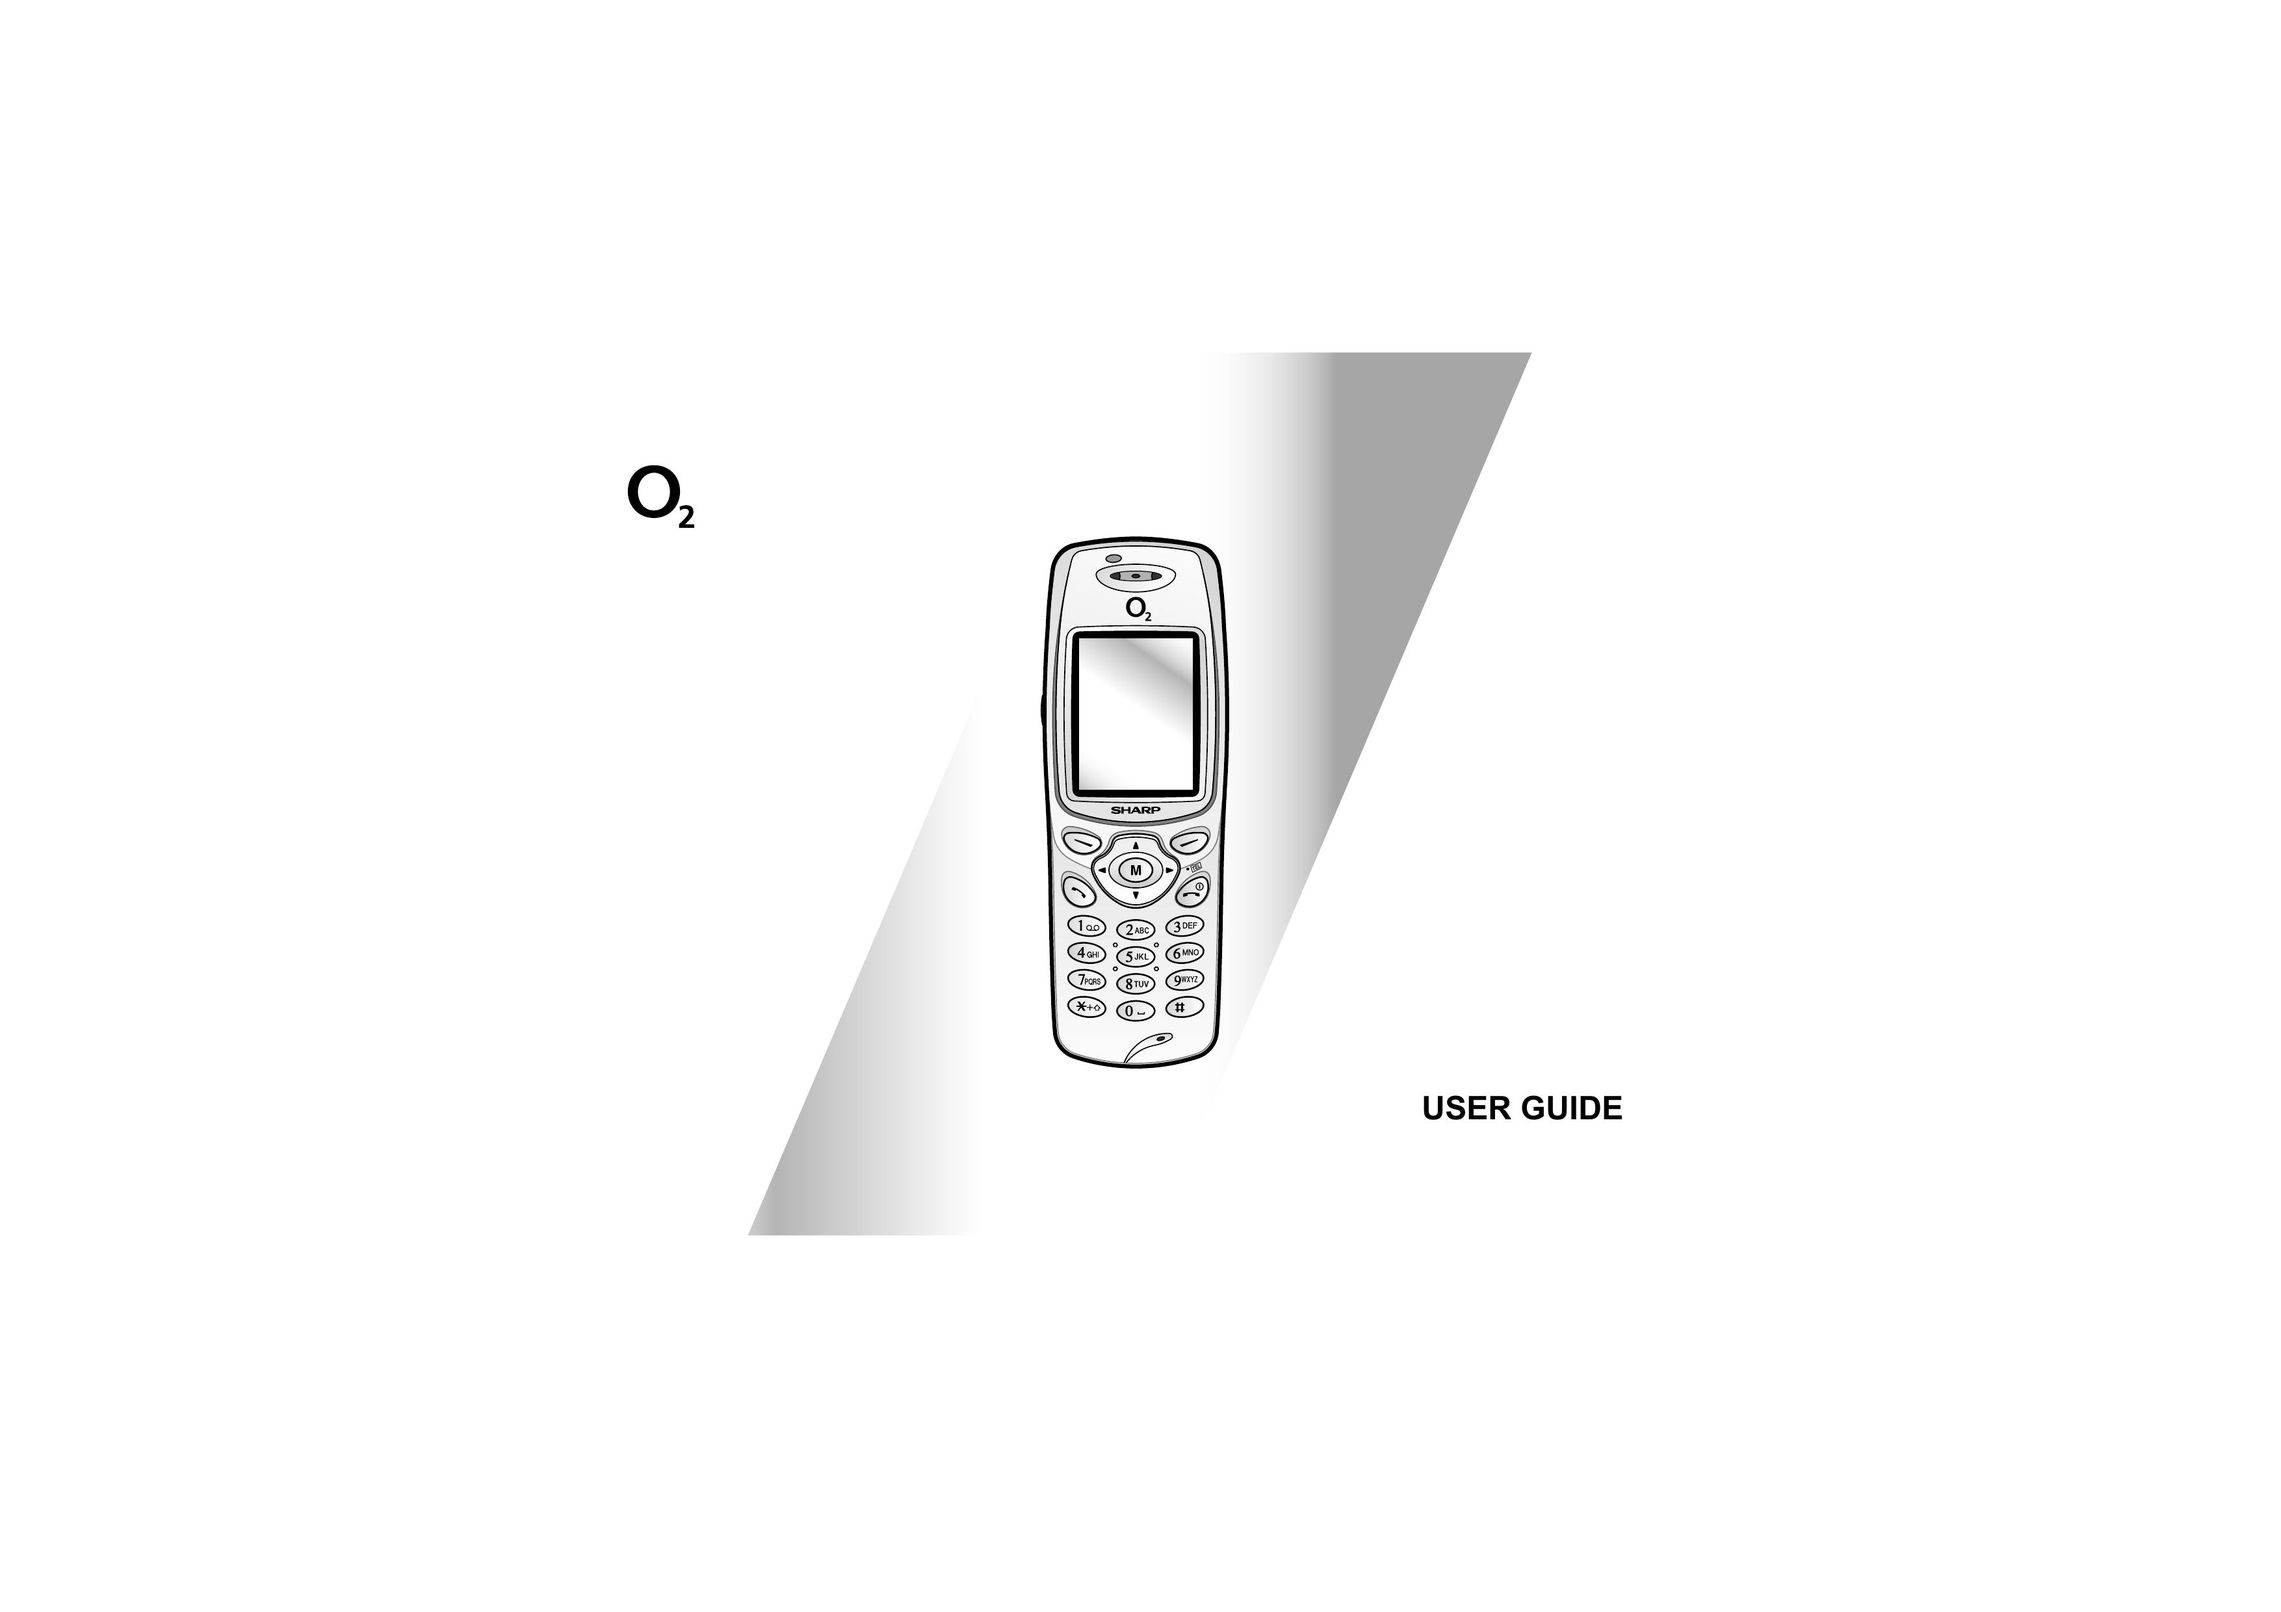 Sharp O2 Cell Phone User Manual